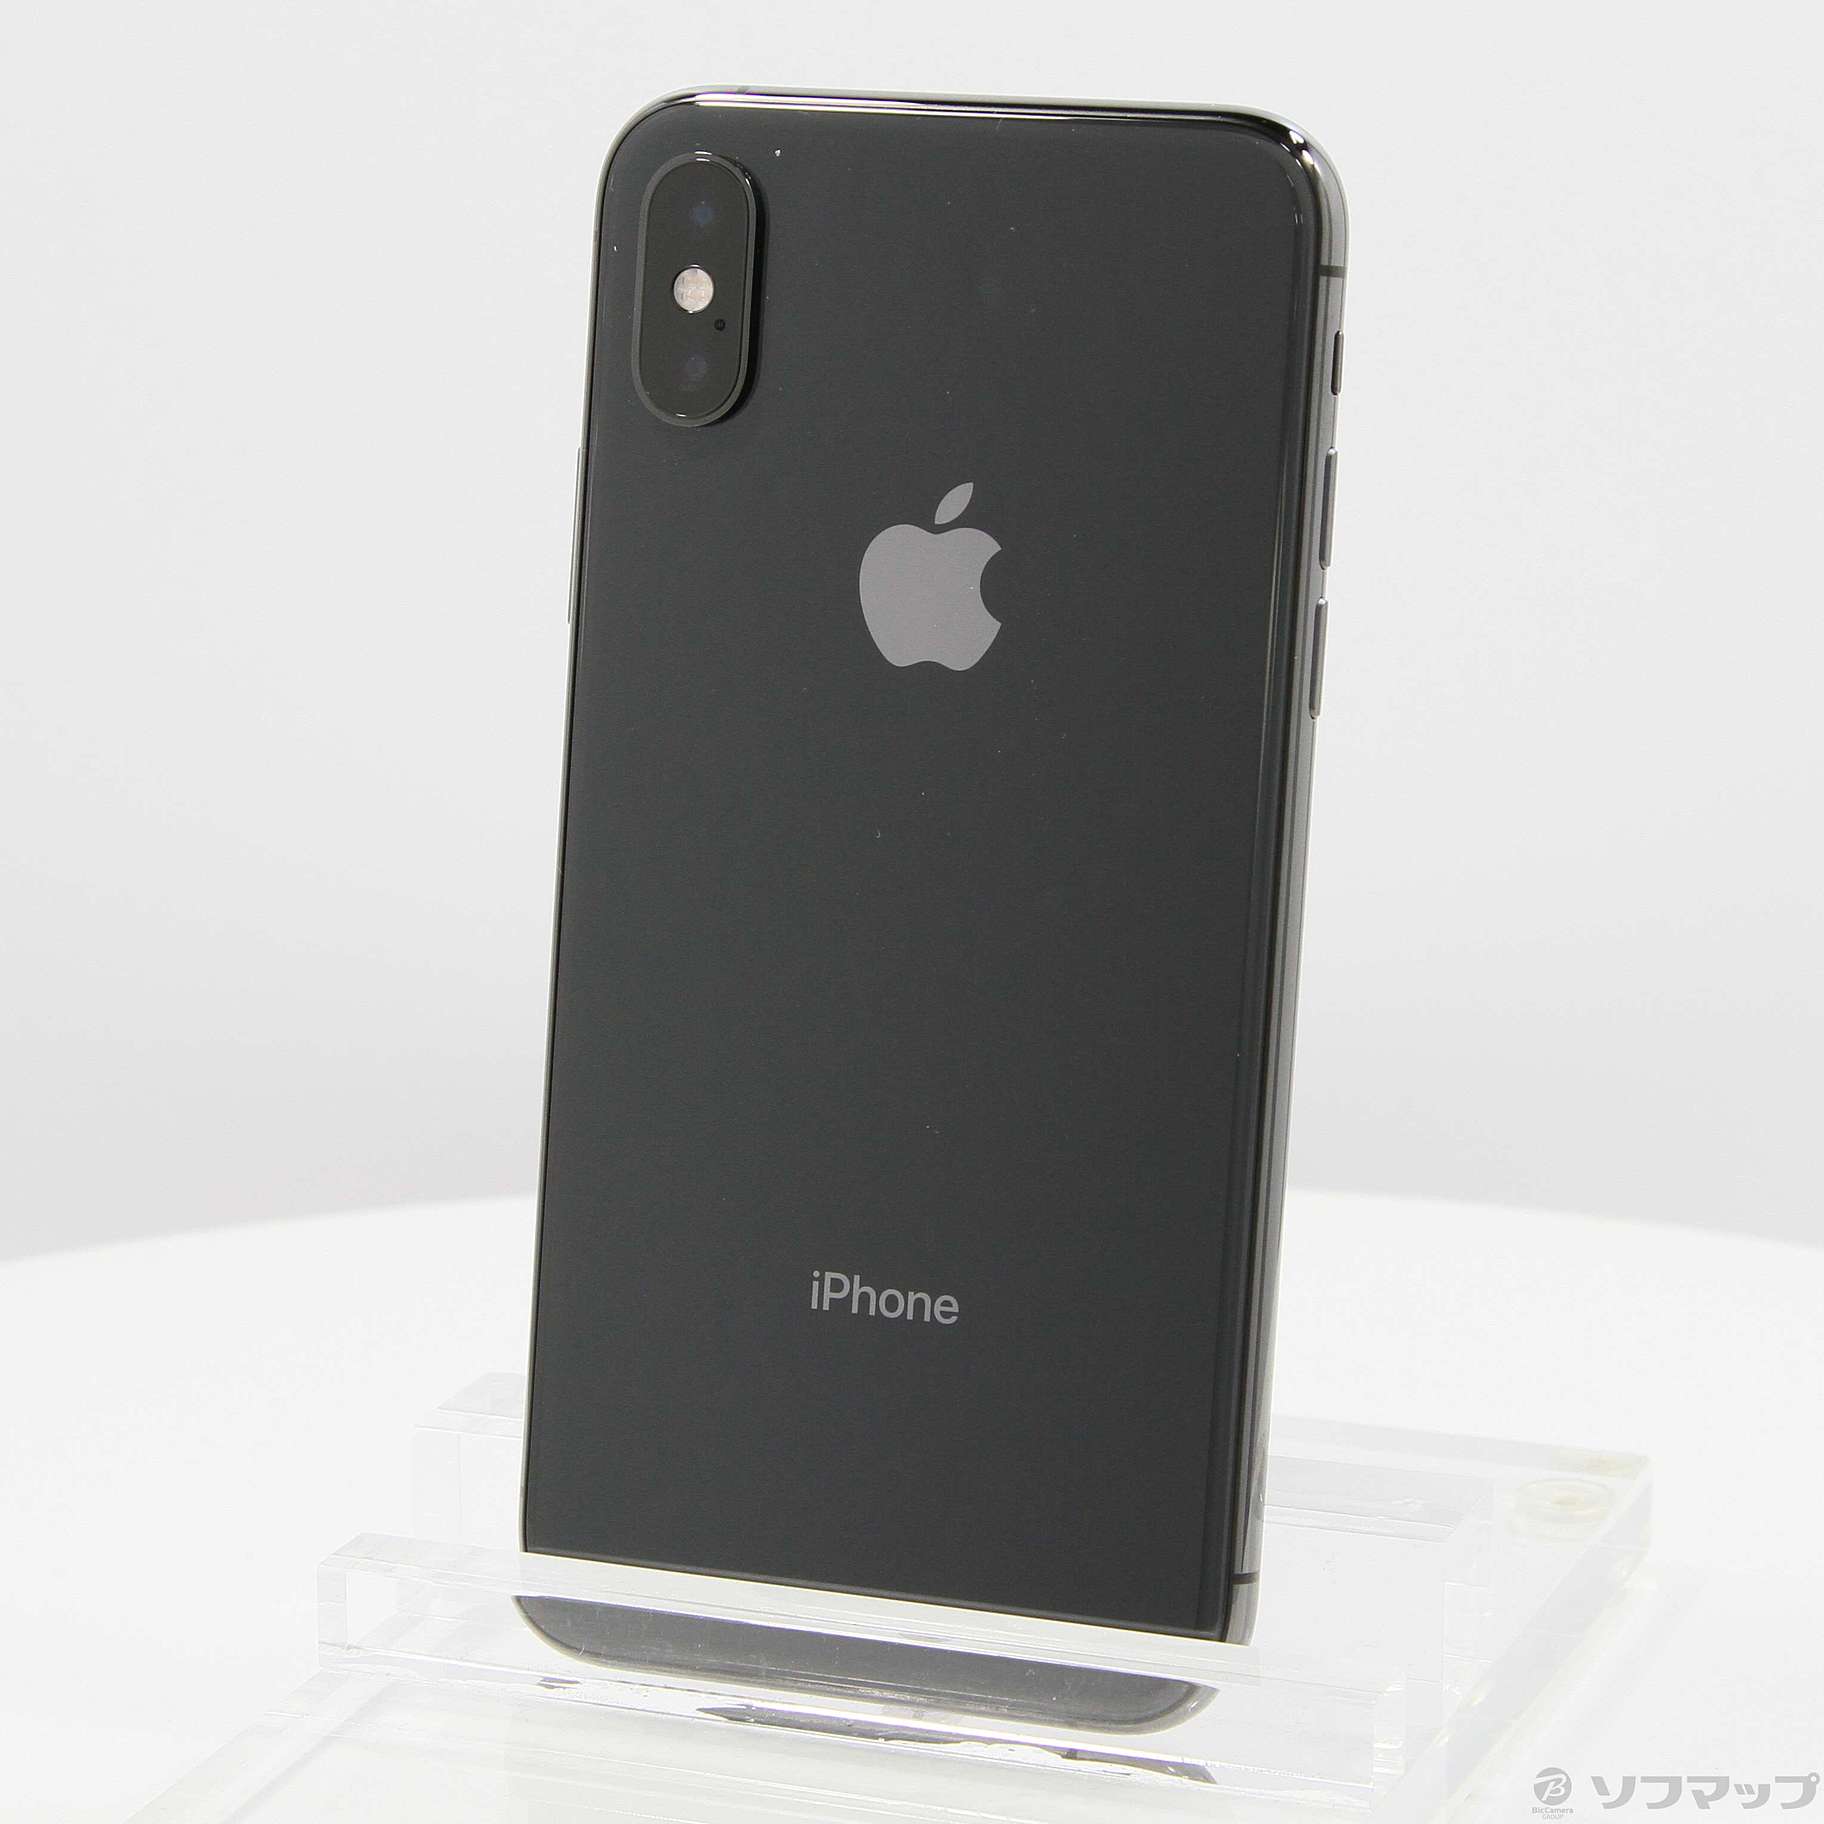 iPhoneXs space gray 64GB